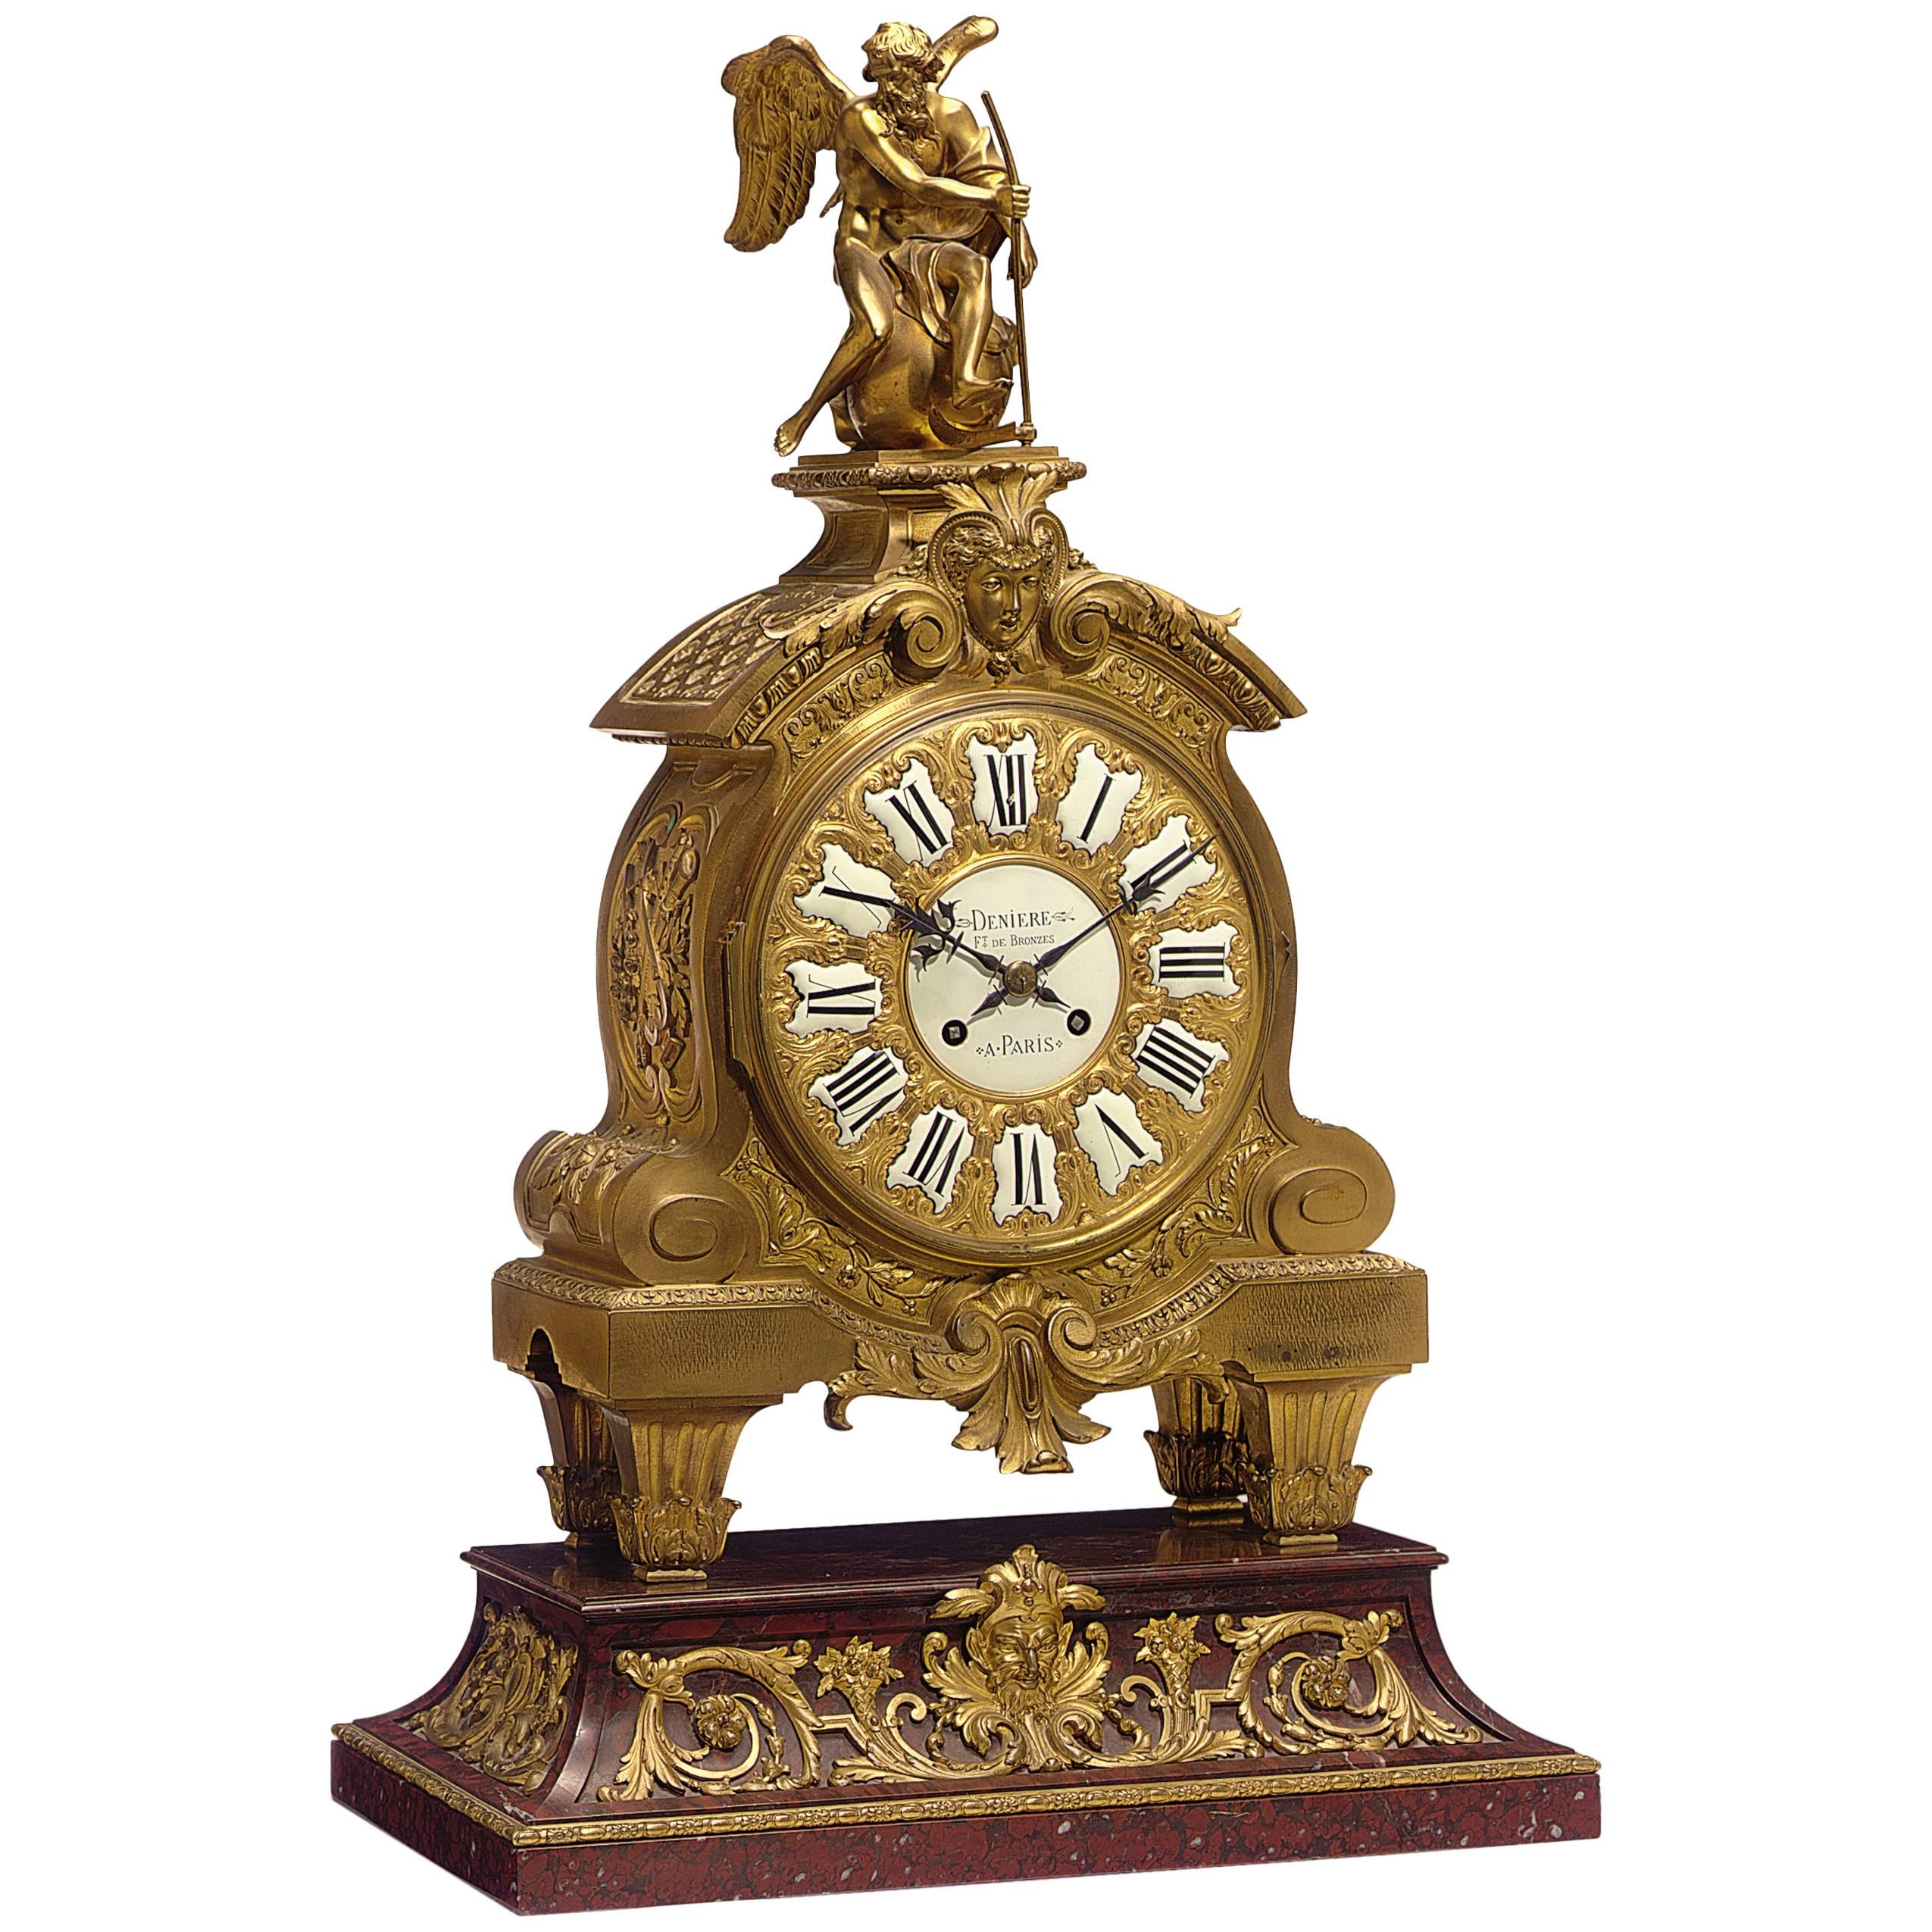 Napoleon III Period Ormolu and Red Marble Mantel Clock by Denière & Fils